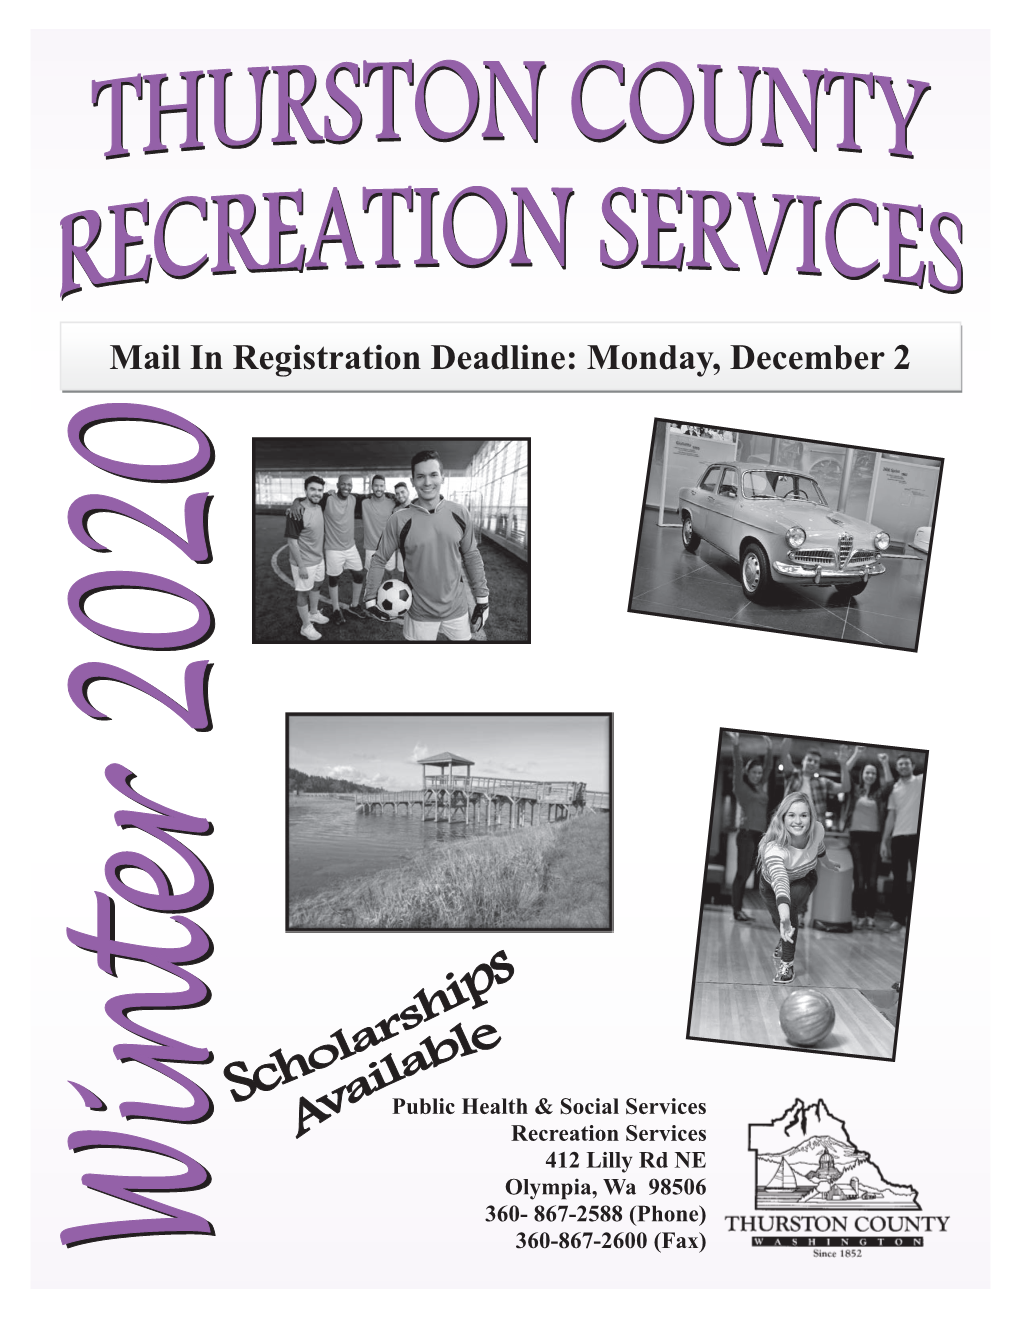 Mail in Registration Deadline: Monday, December 2